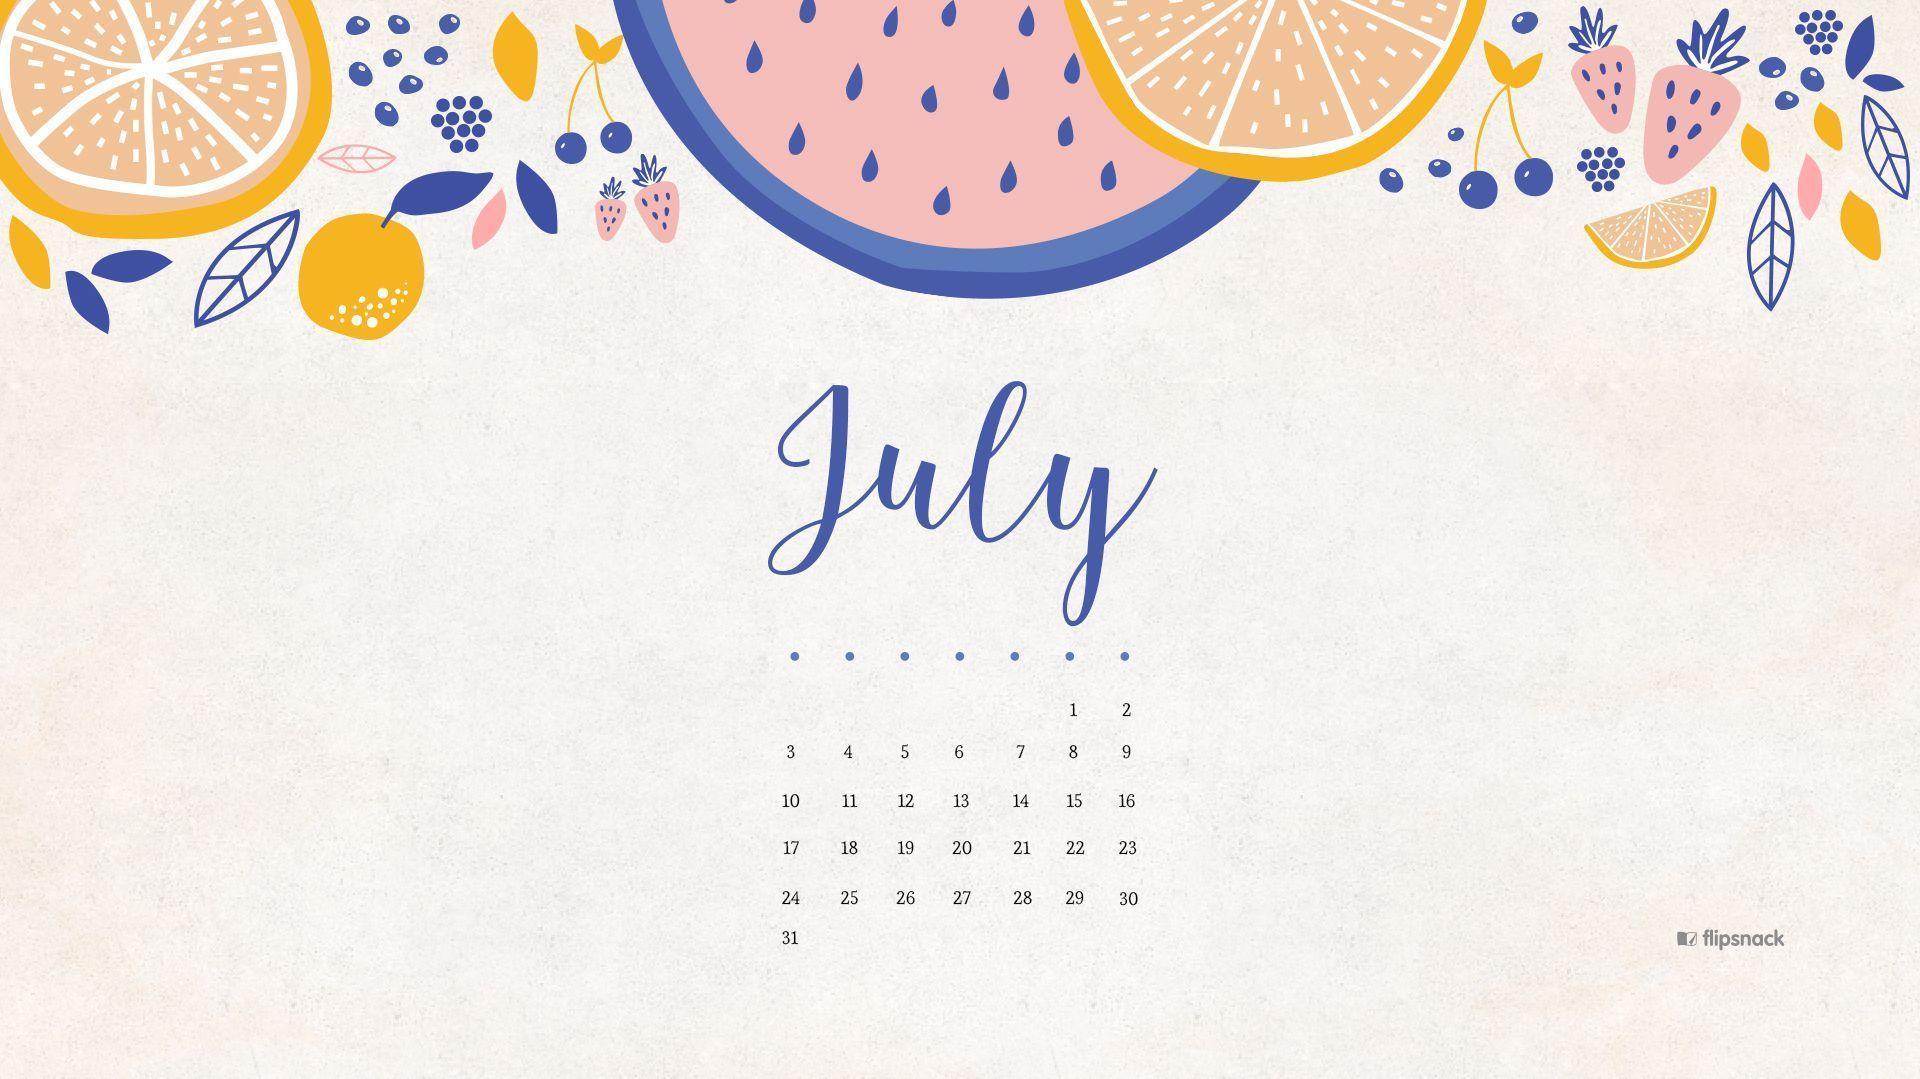 July 2016 free calendar wallpaper